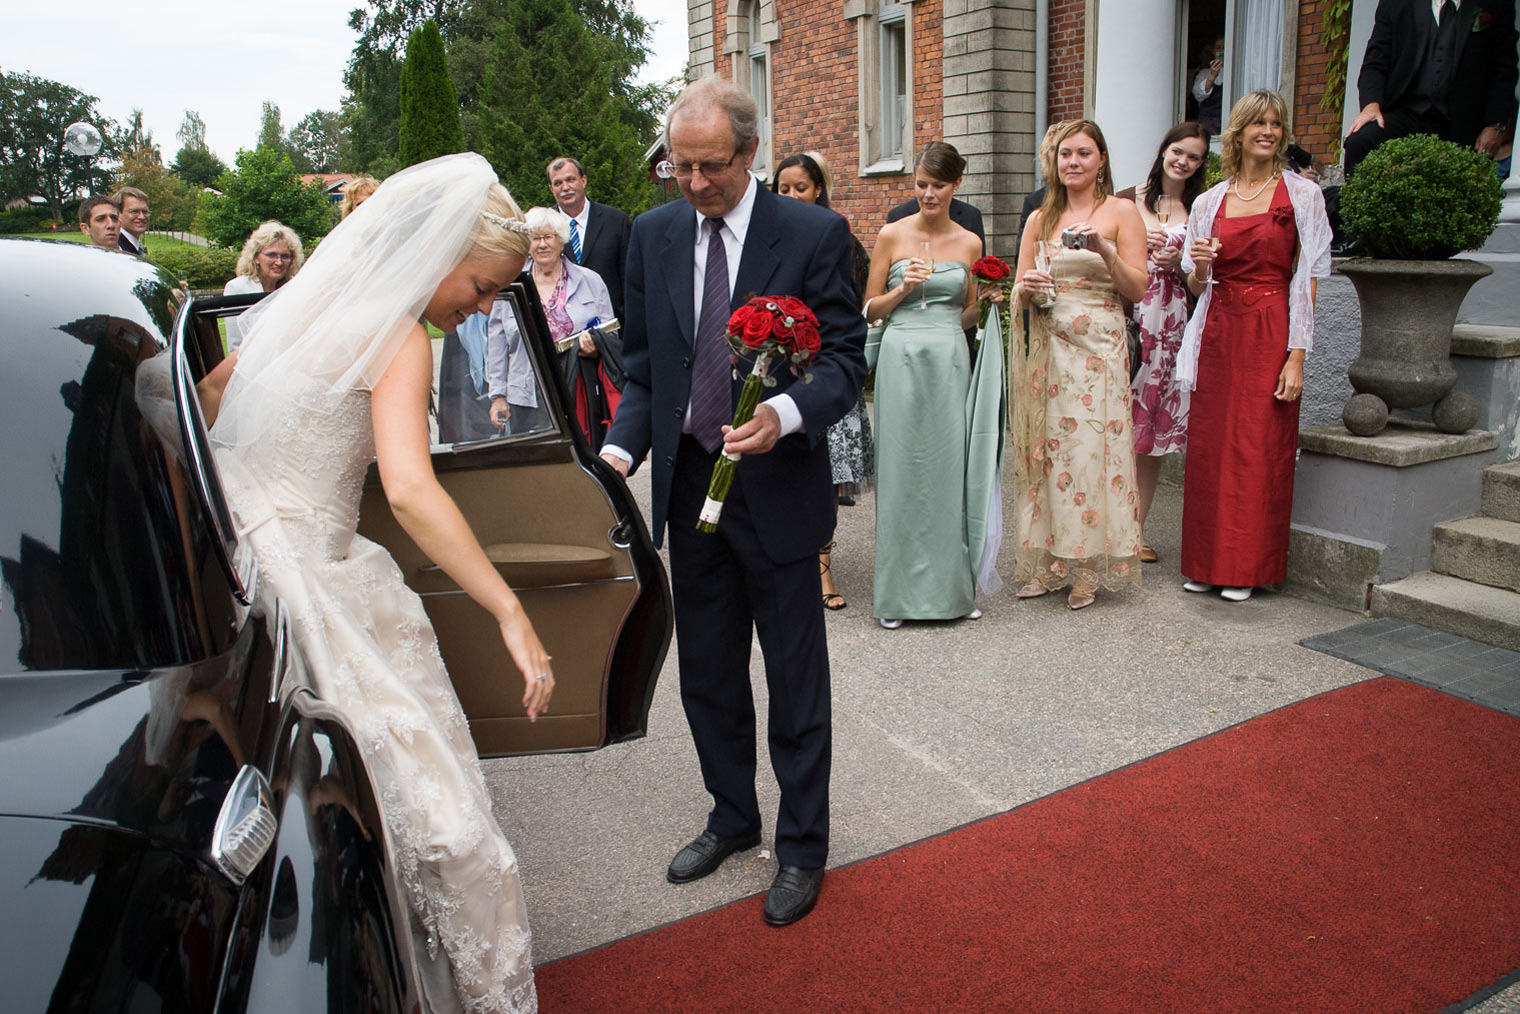 Wedding Photos at Thorskogs slott